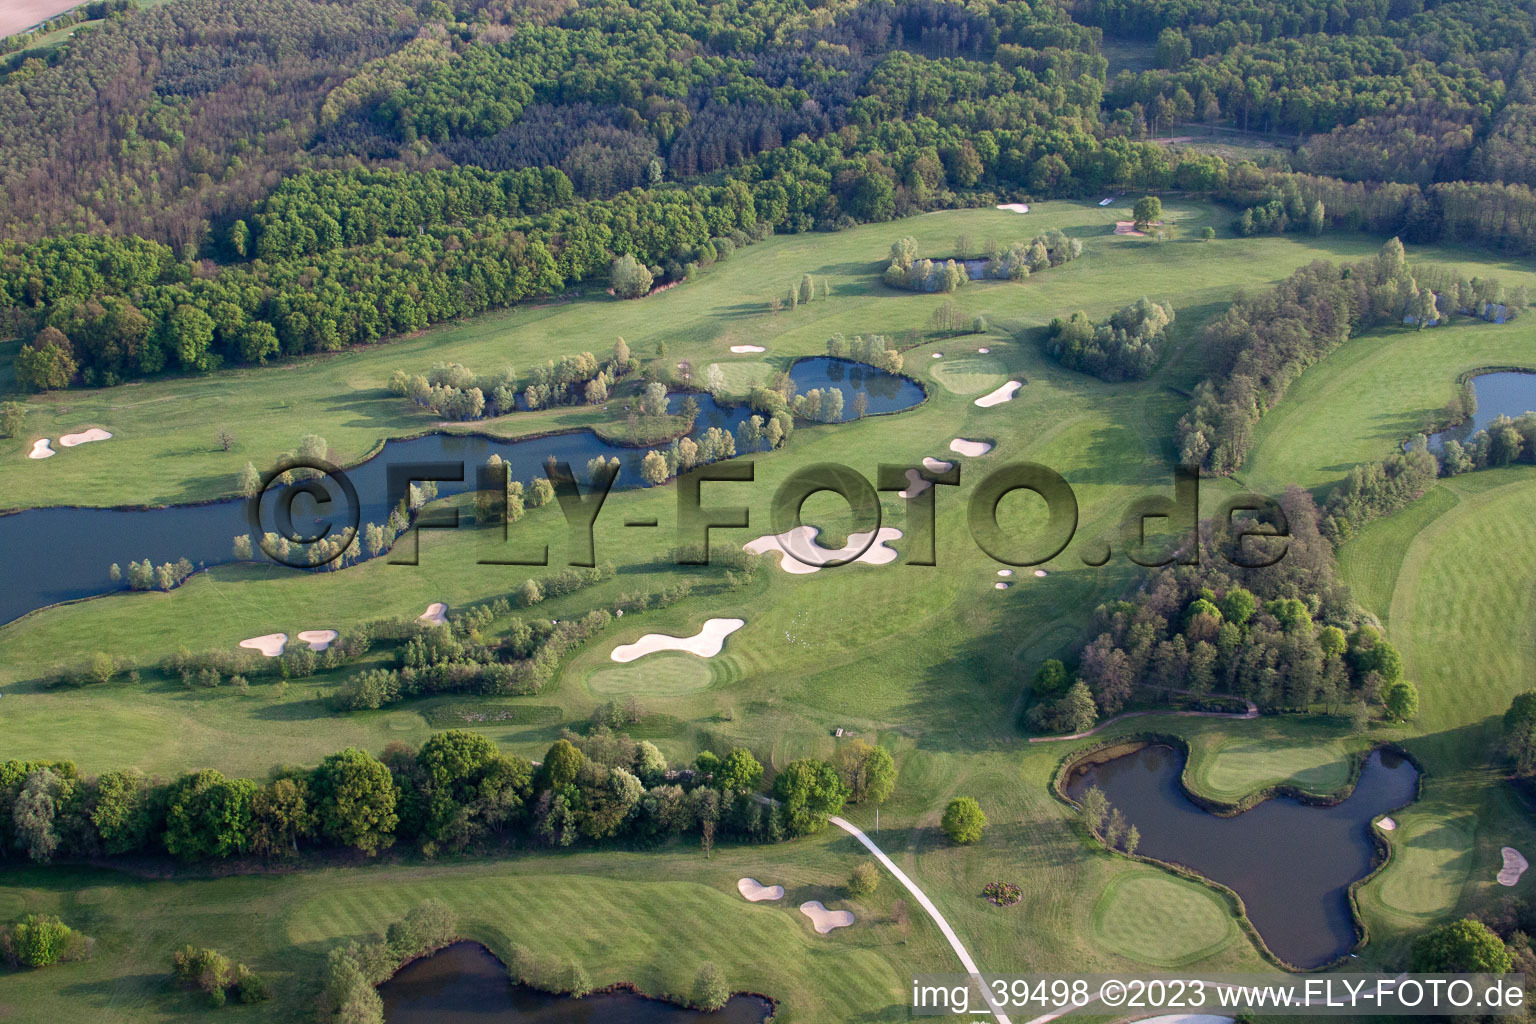 Club de golf Soufflenheim Baden-Baden à Soufflenheim dans le département Bas Rhin, France du point de vue du drone